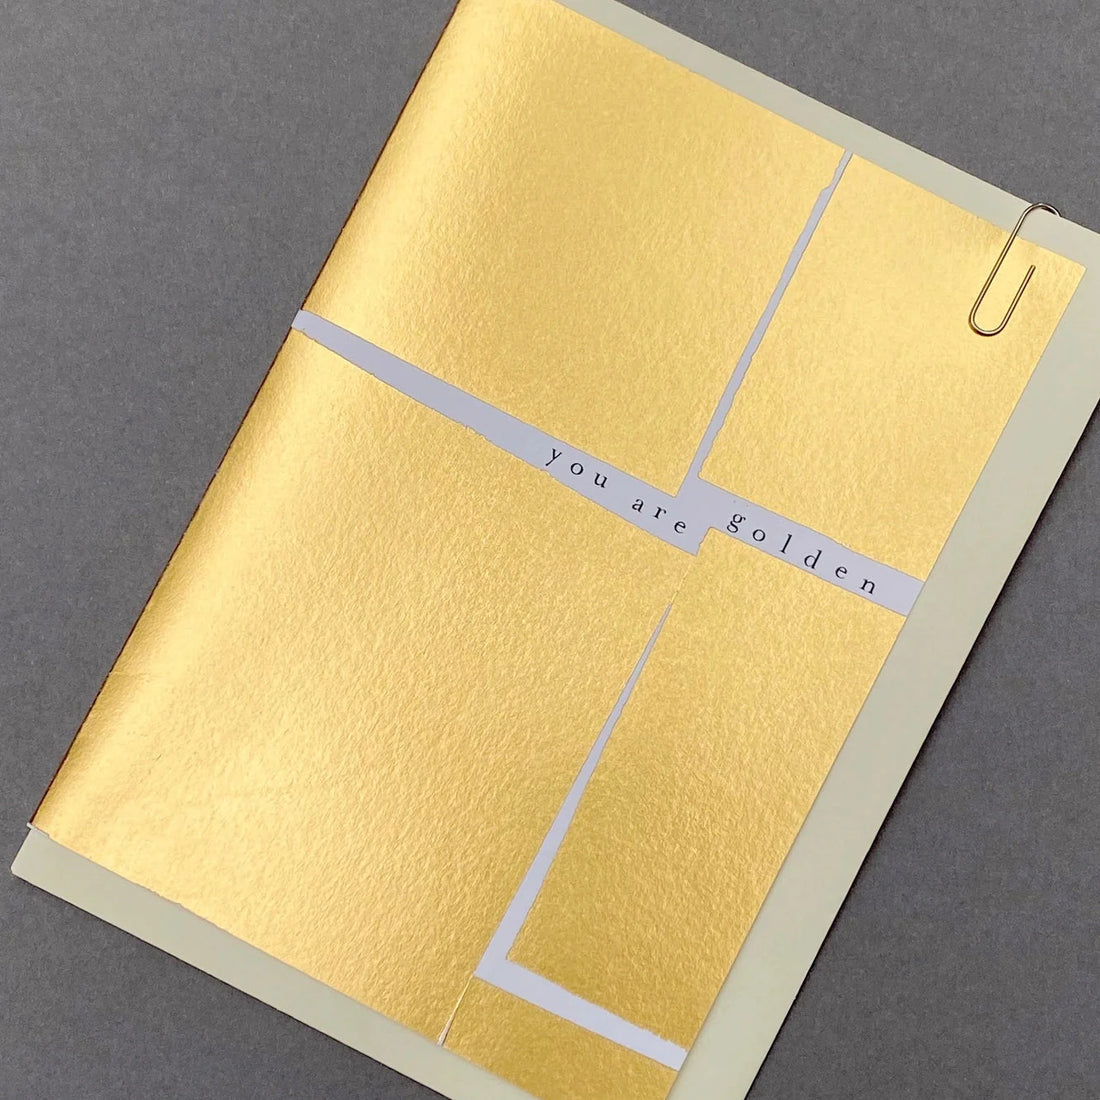 Pavilion Metallic Gold Foil 'You Are Golden' Greetings Card Cards Pavilion